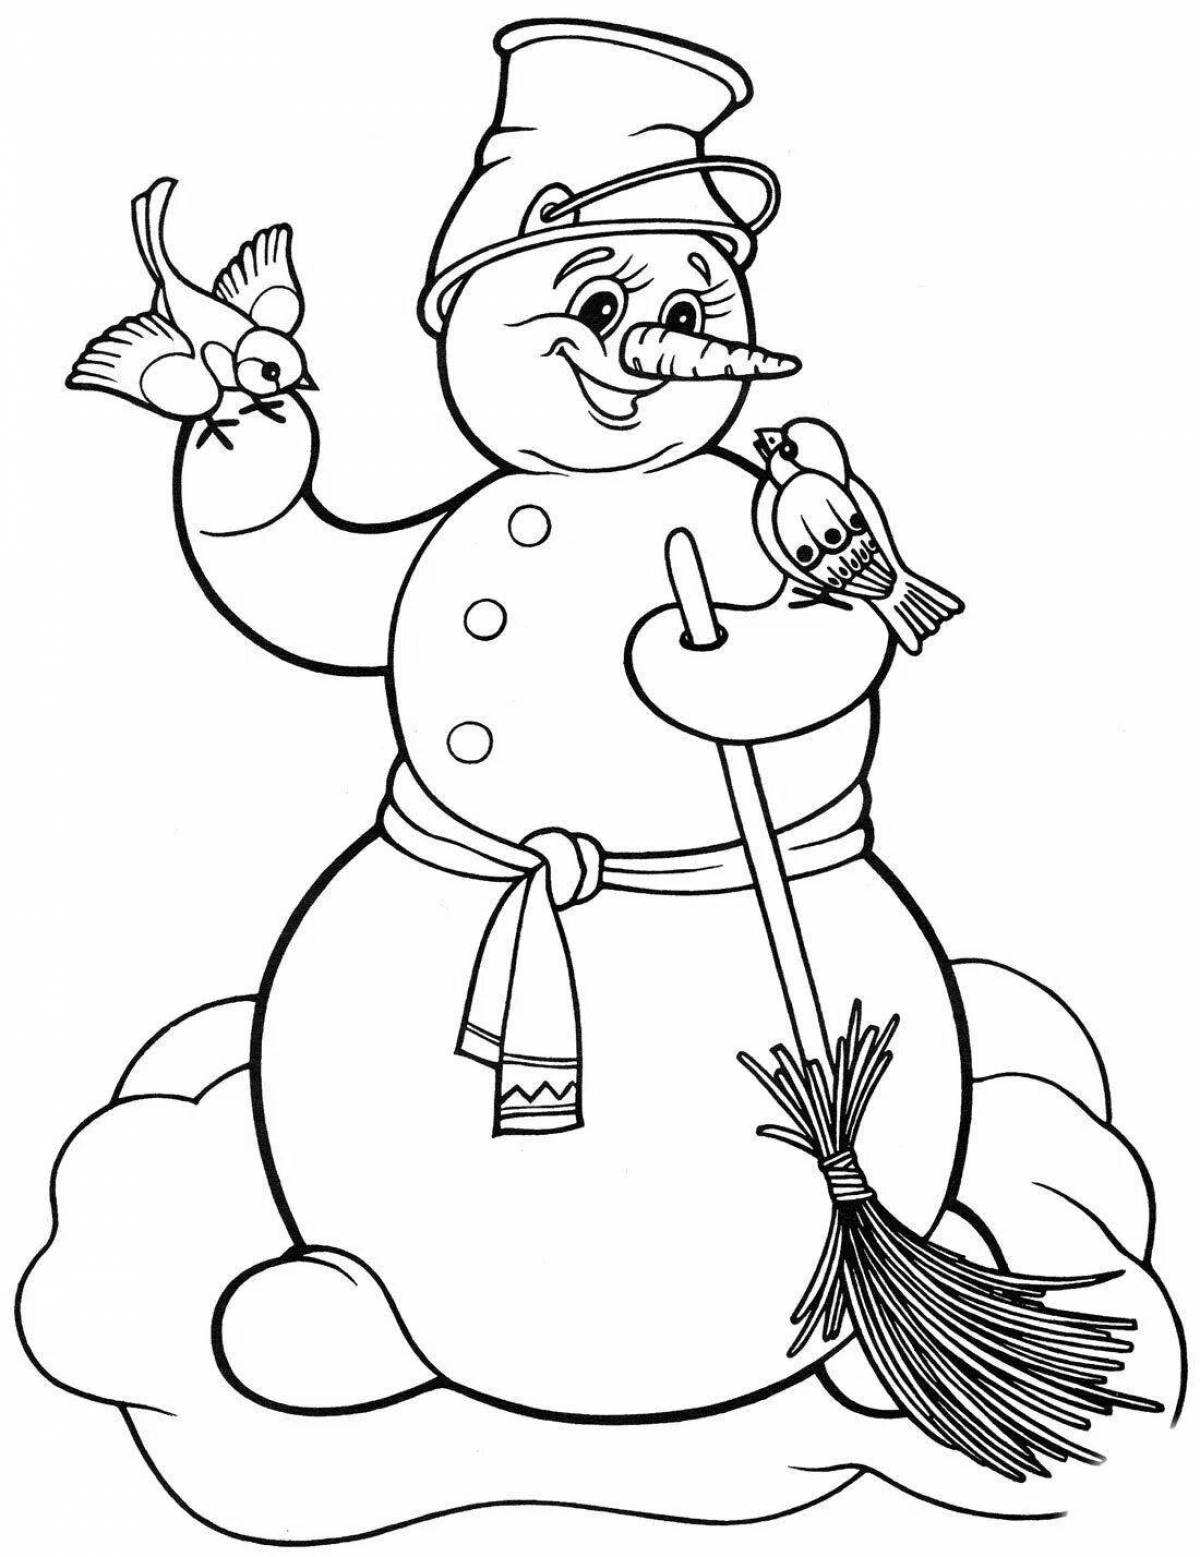 Fun coloring snowman